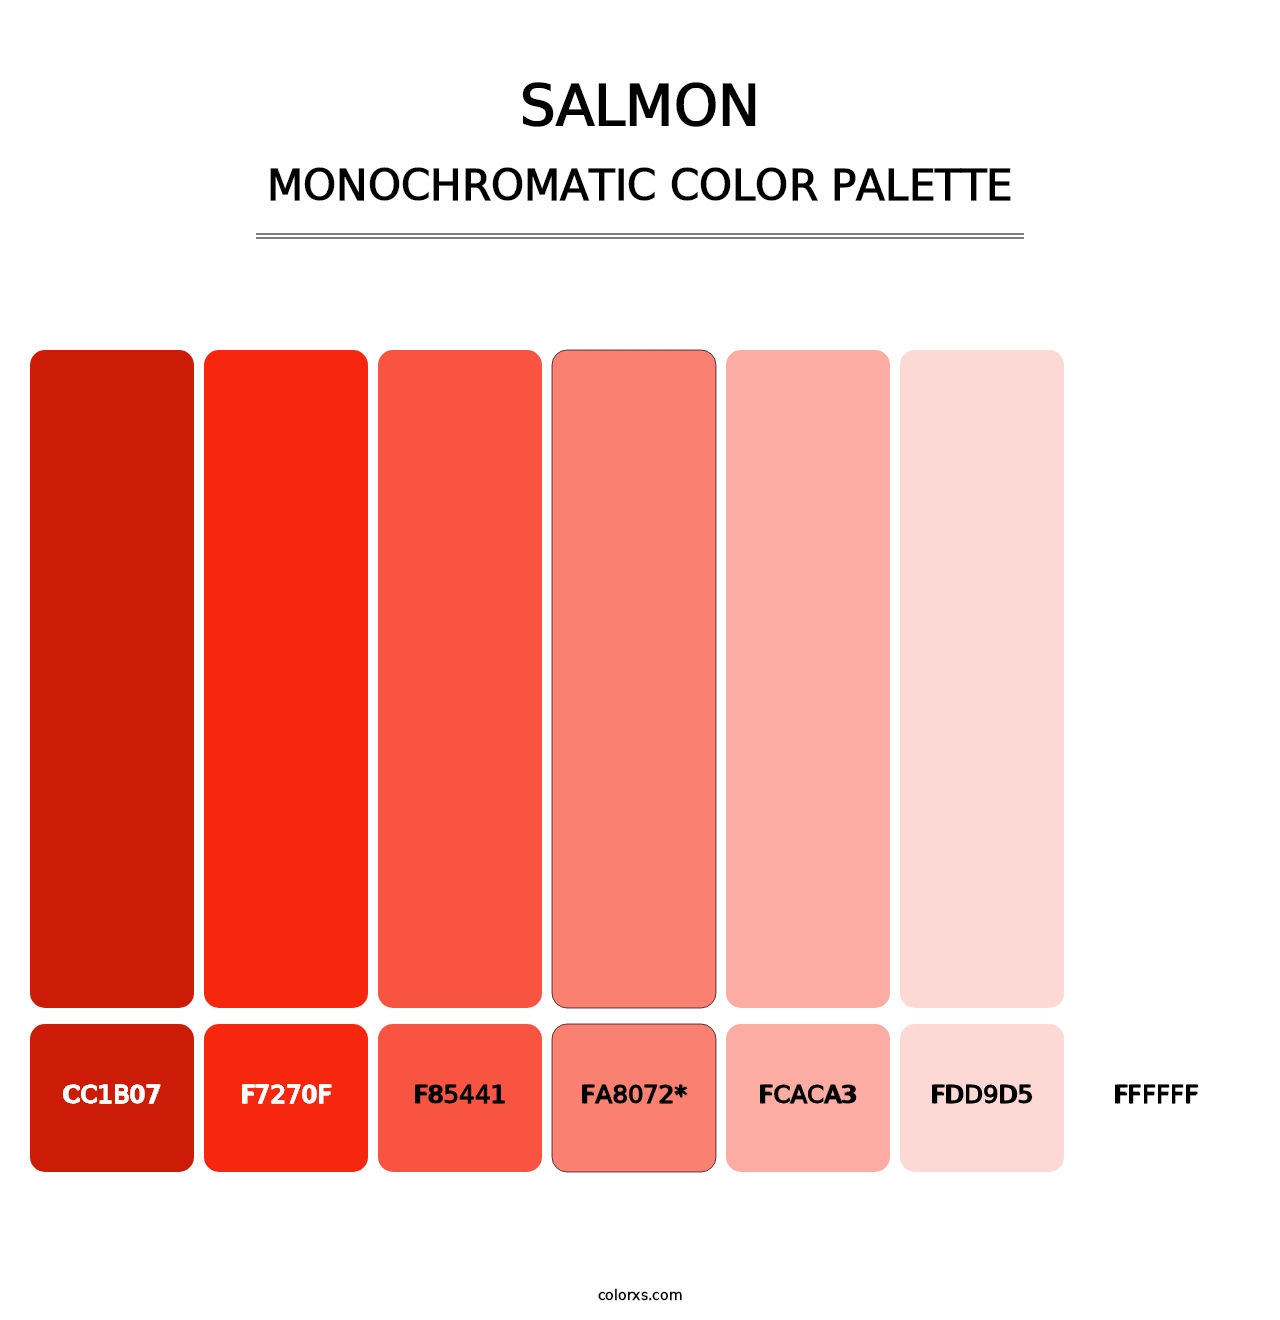 Salmon - Monochromatic Color Palette